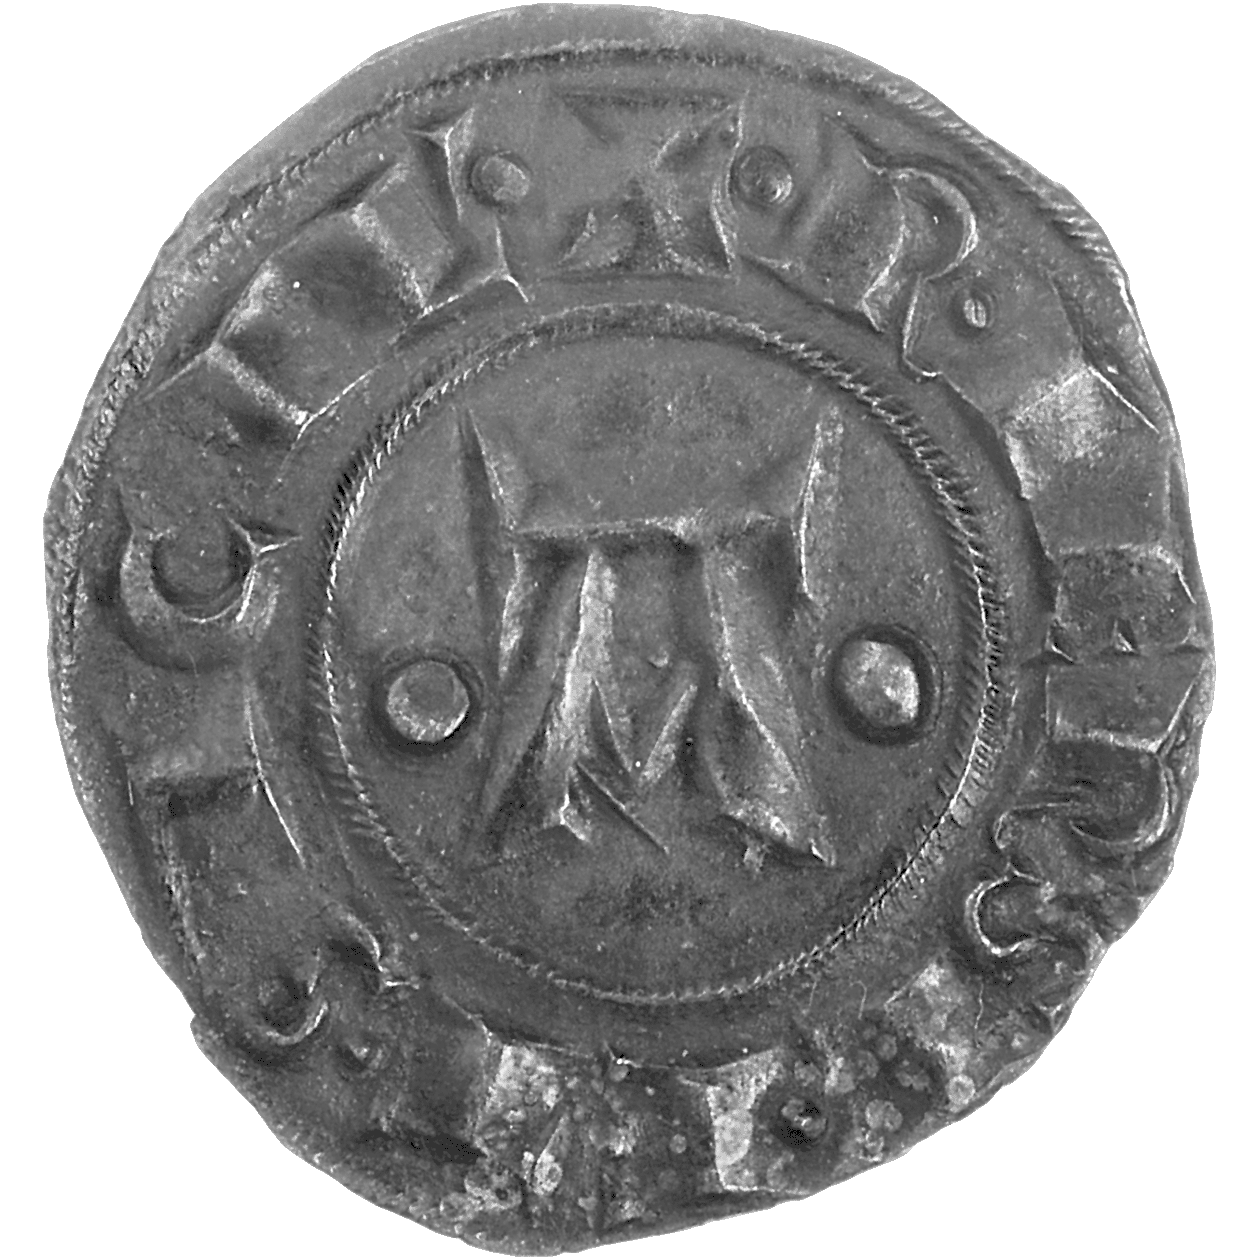 Holy Roman Empire, Frederick II of Hohenstaufen, Denarius (reverse)